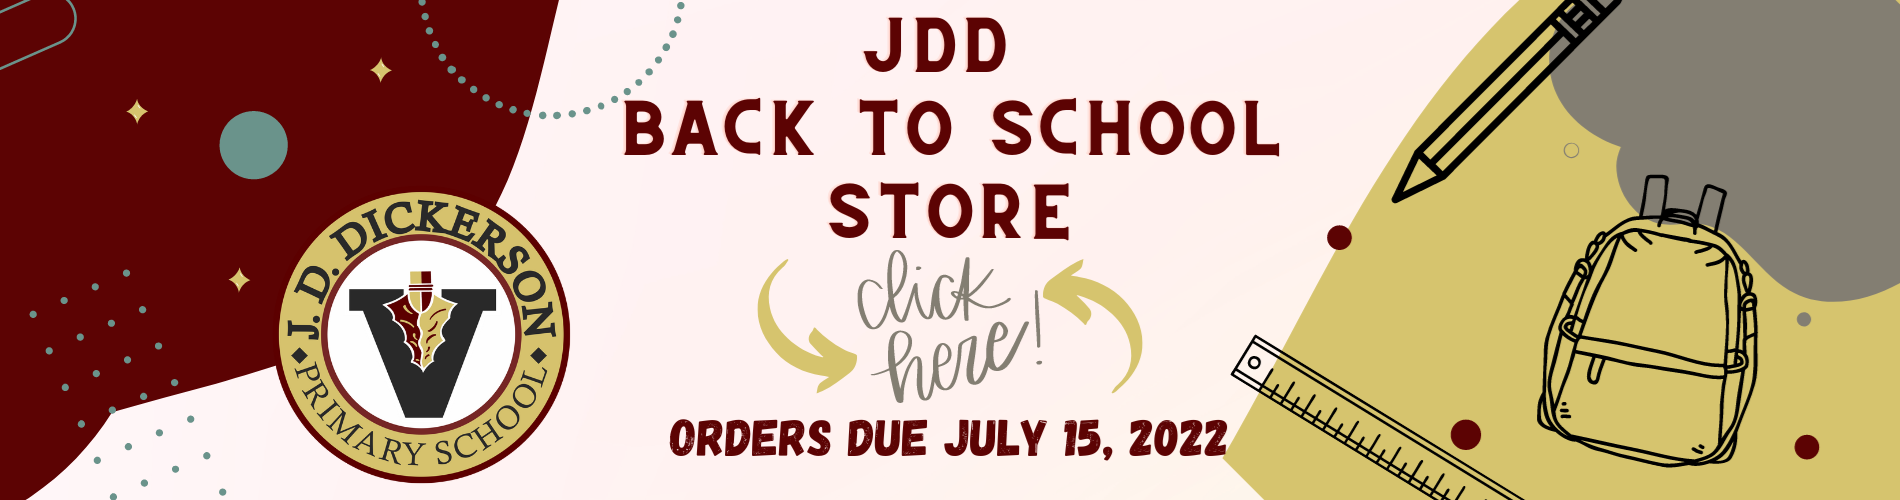 JDD 22-23 Store